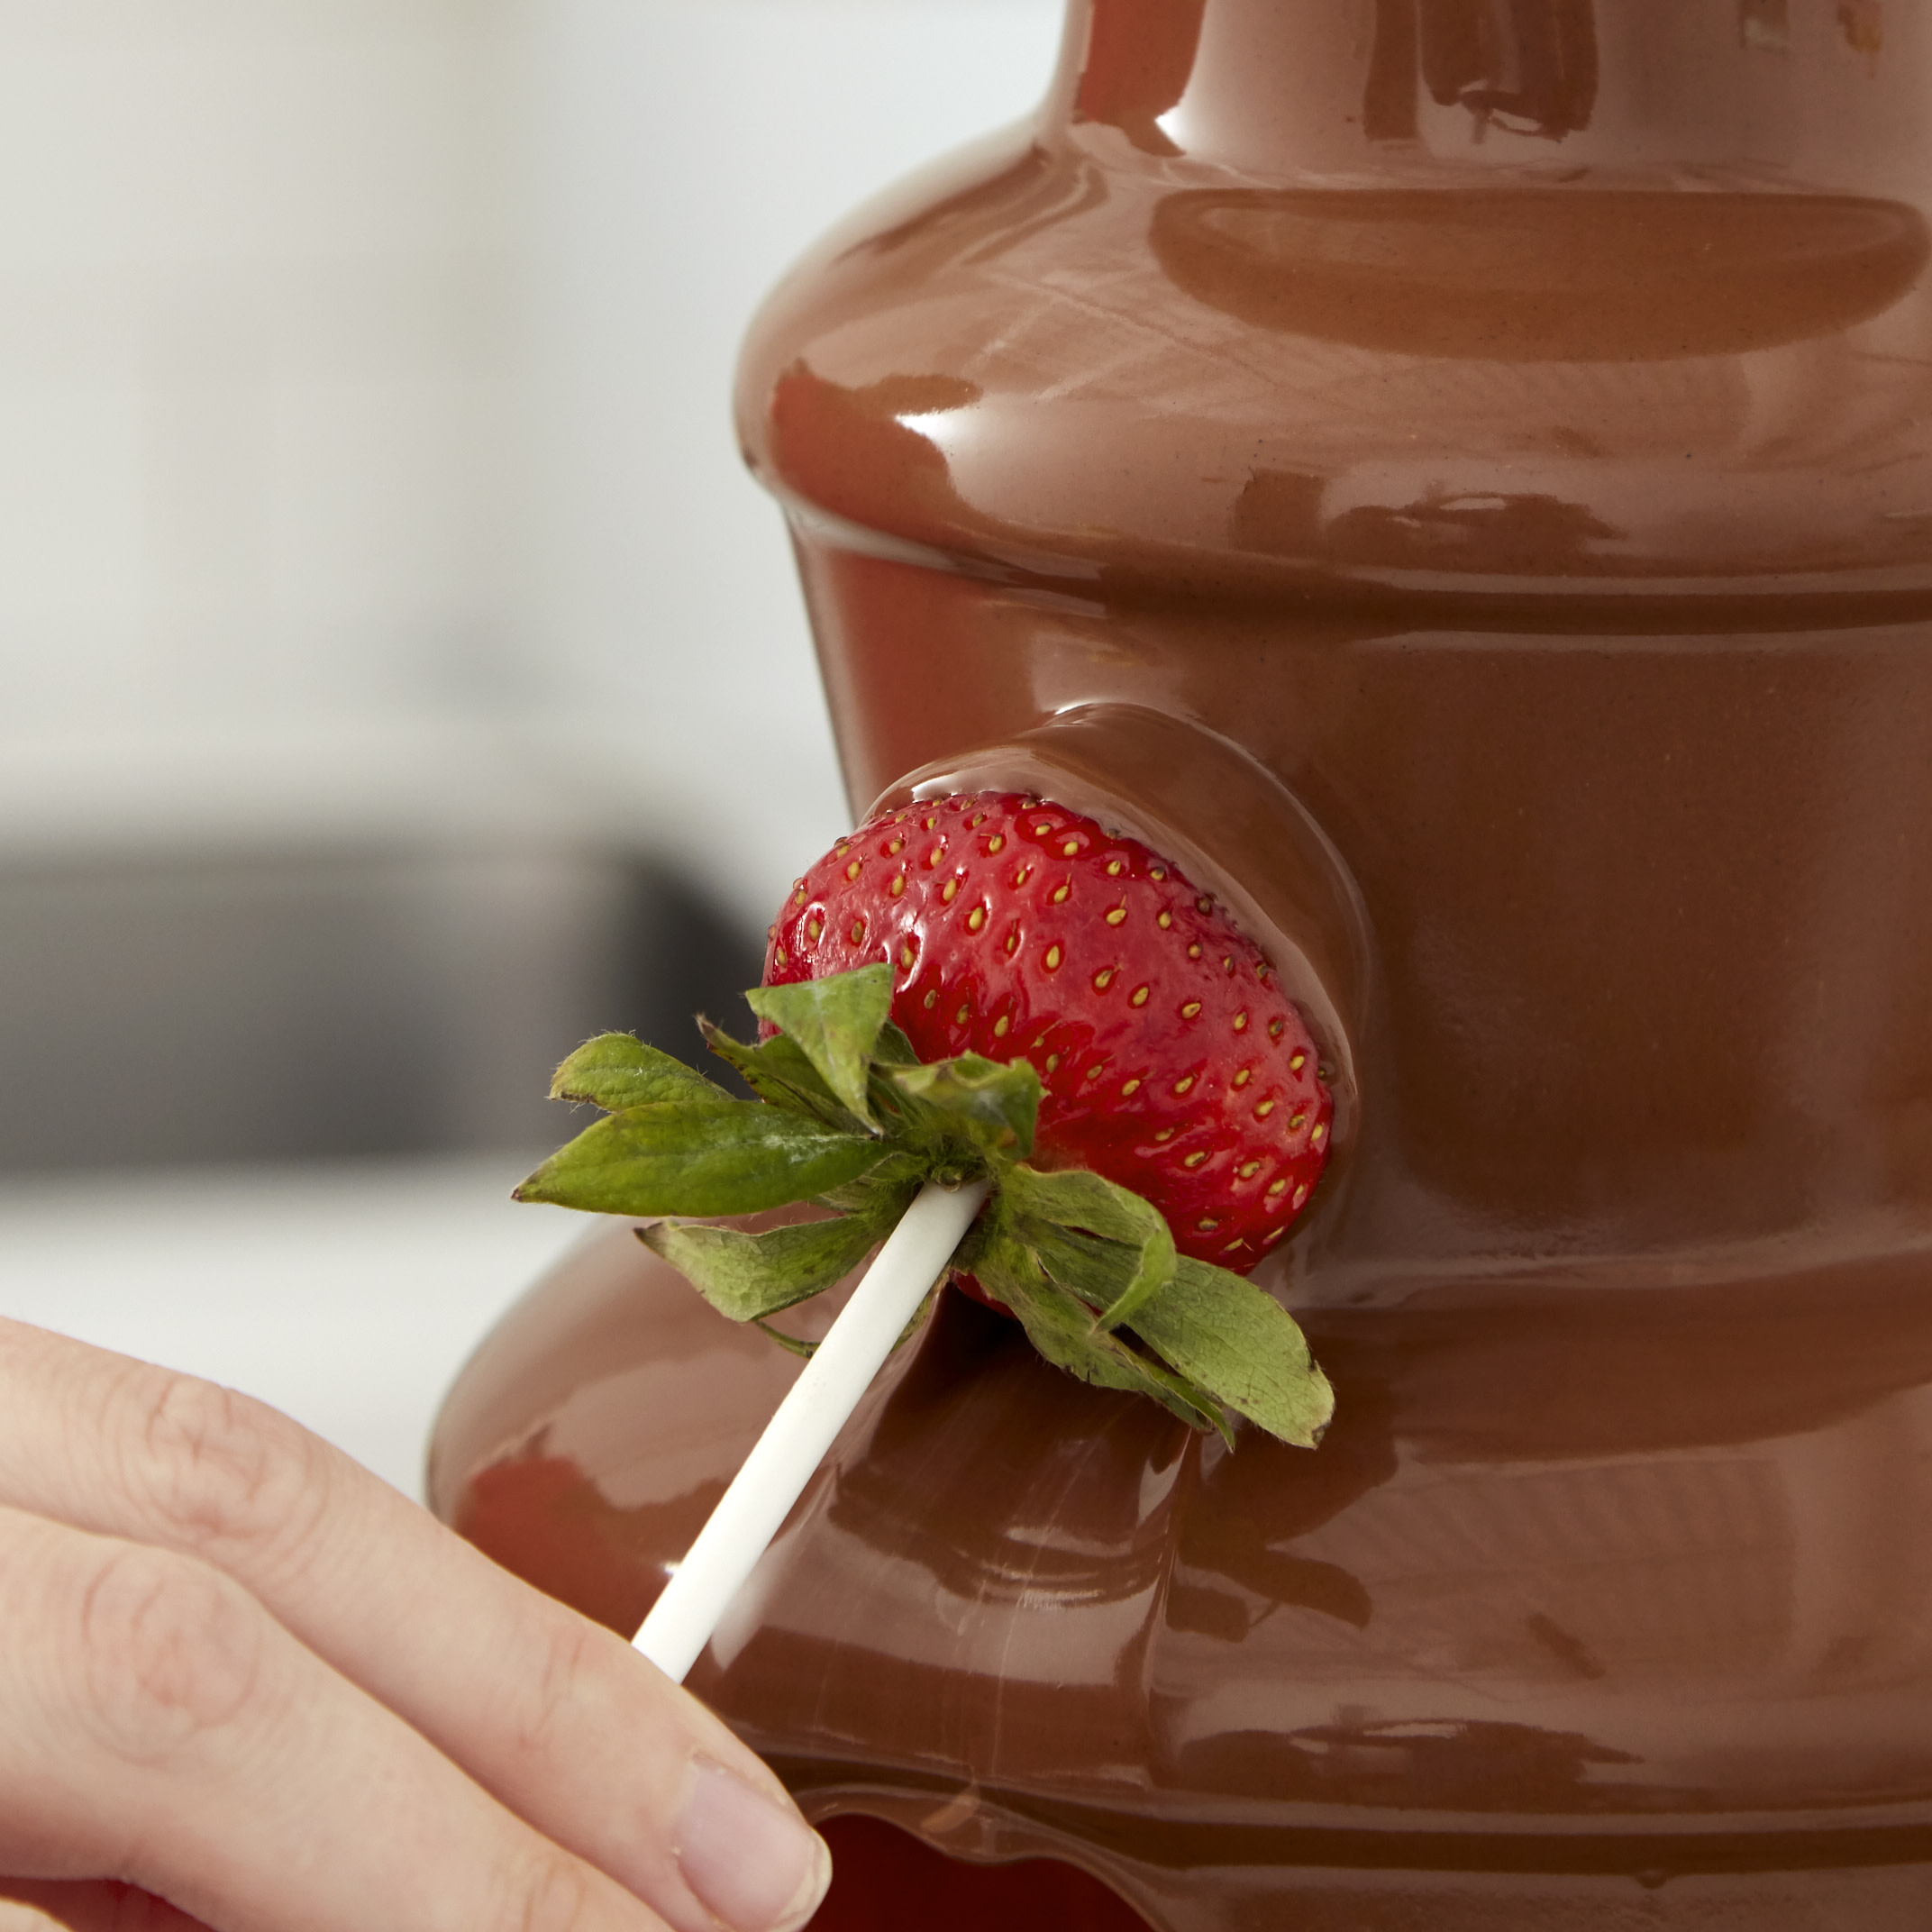 Wilton Dark Chocolate Drops for Chocolate Fountains or Fondue Chocolate, 32 oz. (2 lbs) - image 5 of 7